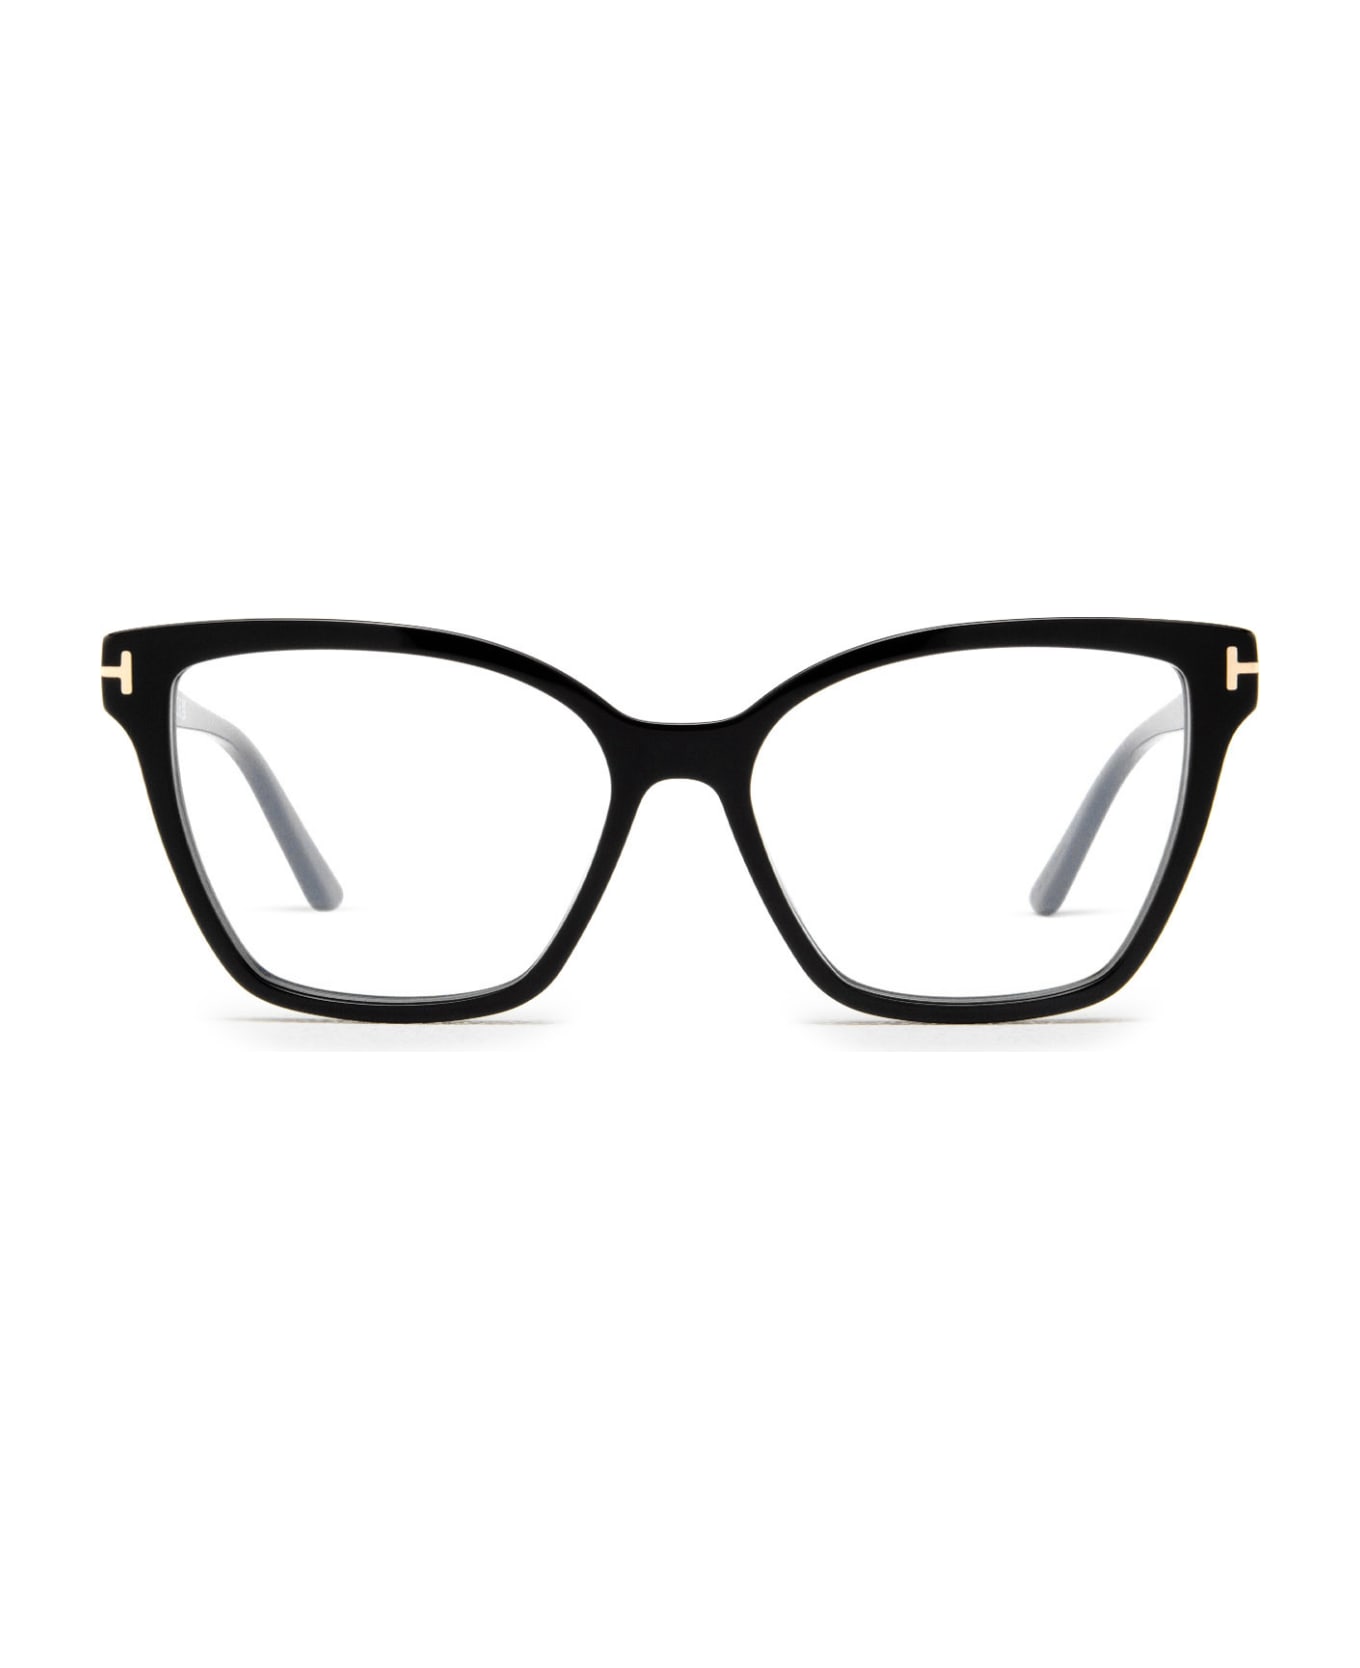 Tom Ford Eyewear Ft5641-b Black Glasses - Black